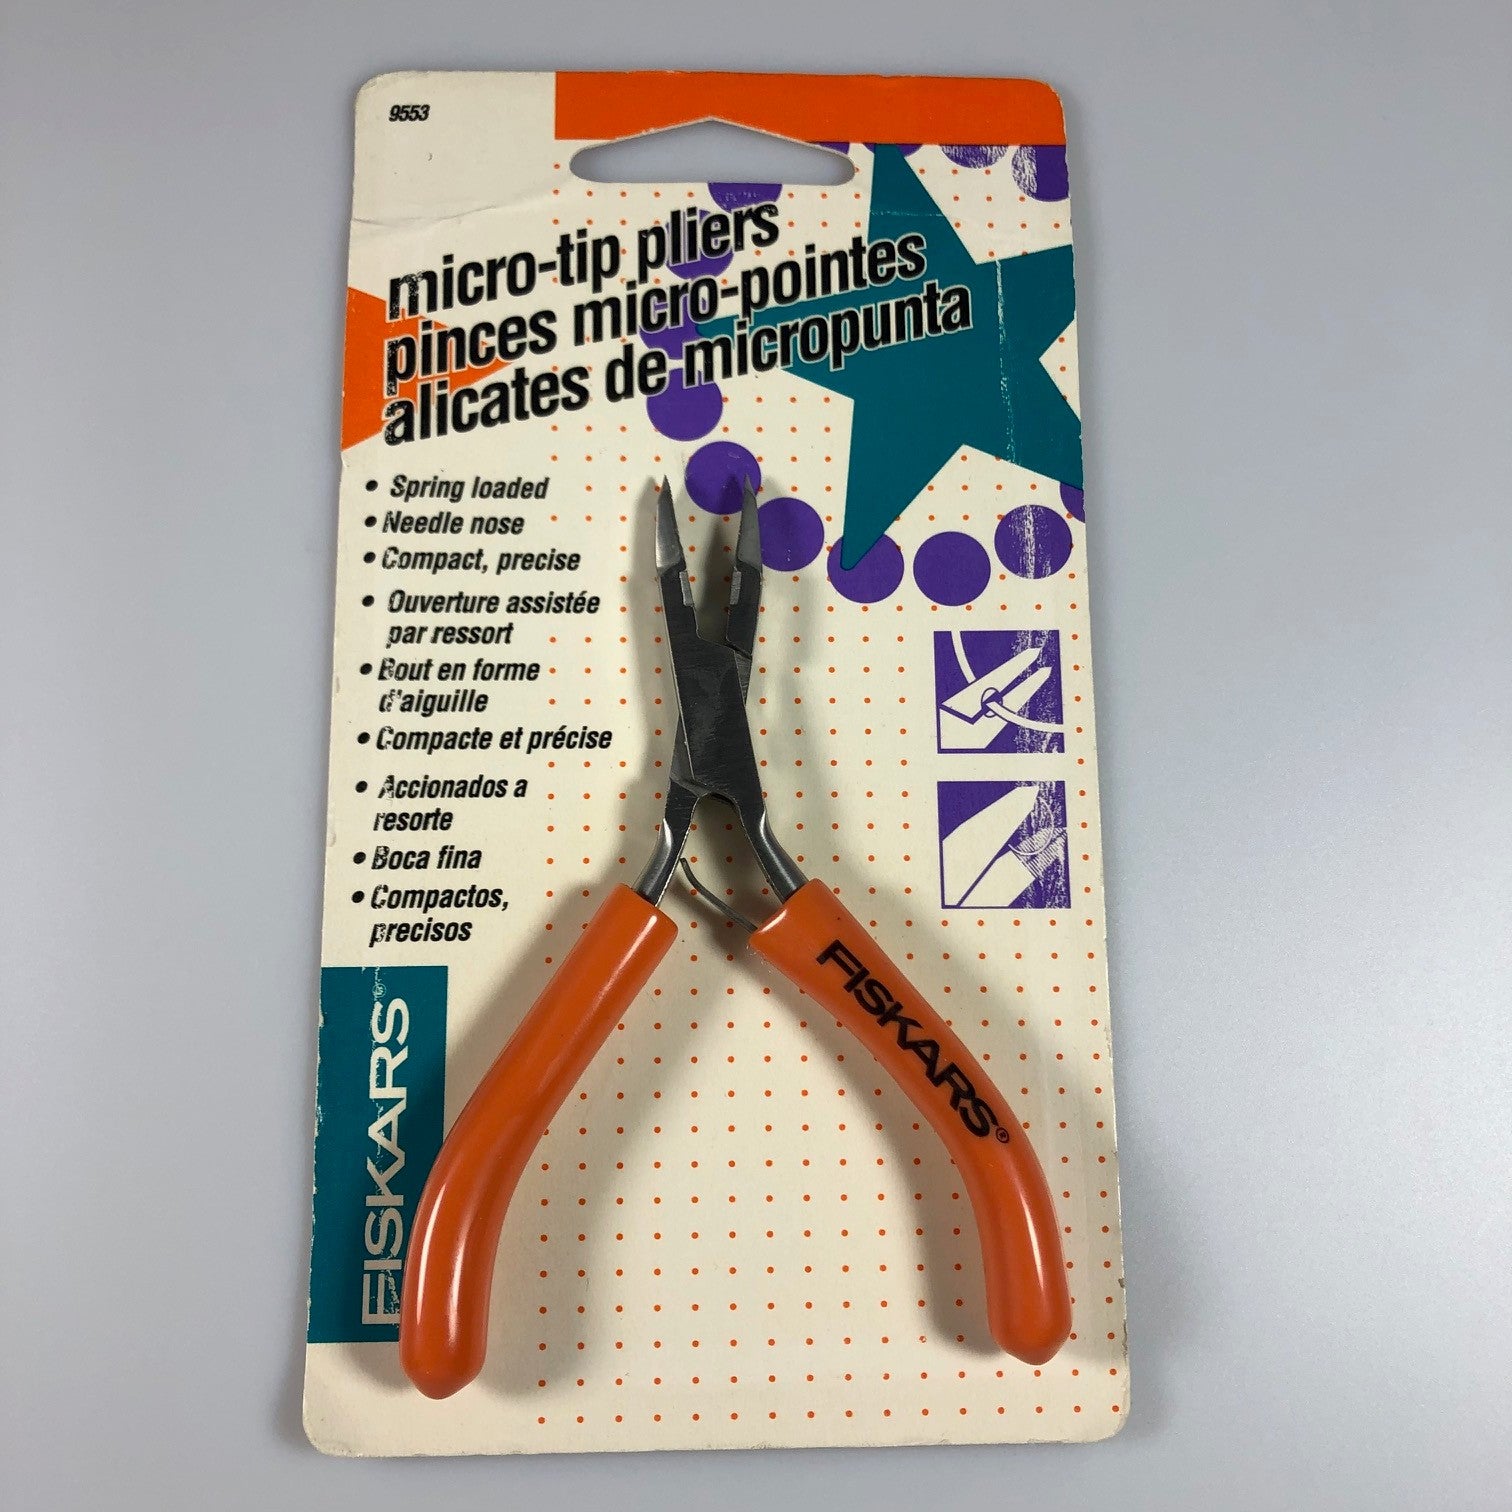 Fiskars Micro-tip pliers